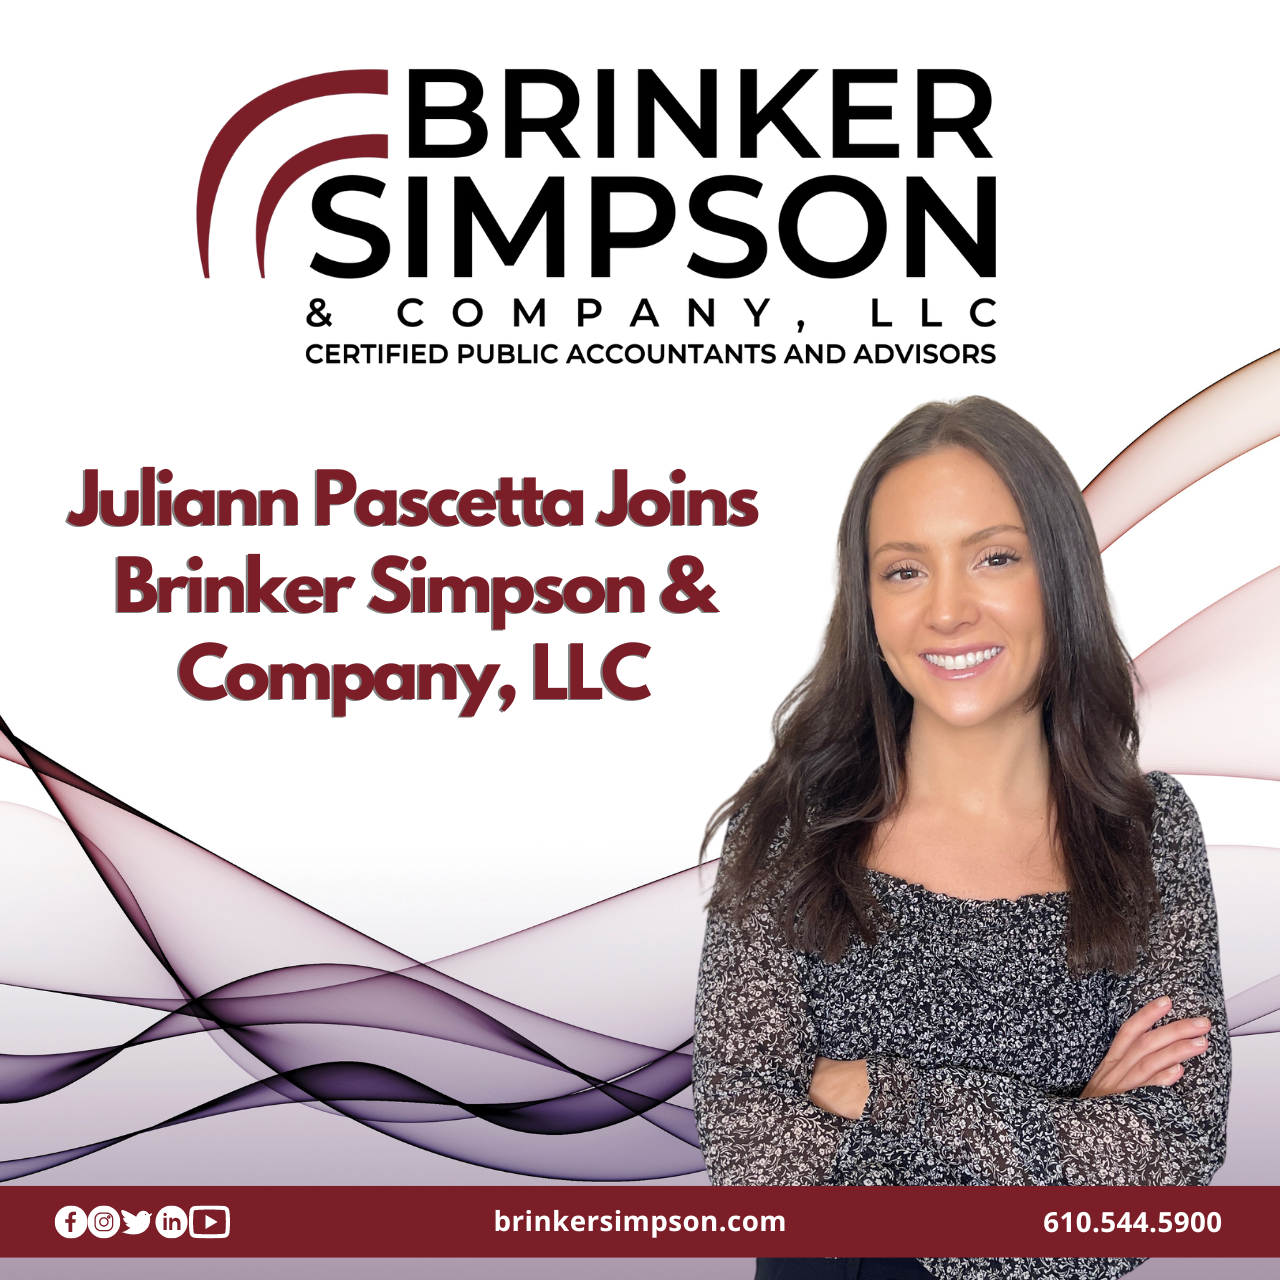 Juliann Pascetta Joins Brinker Simpson & Company, LLC